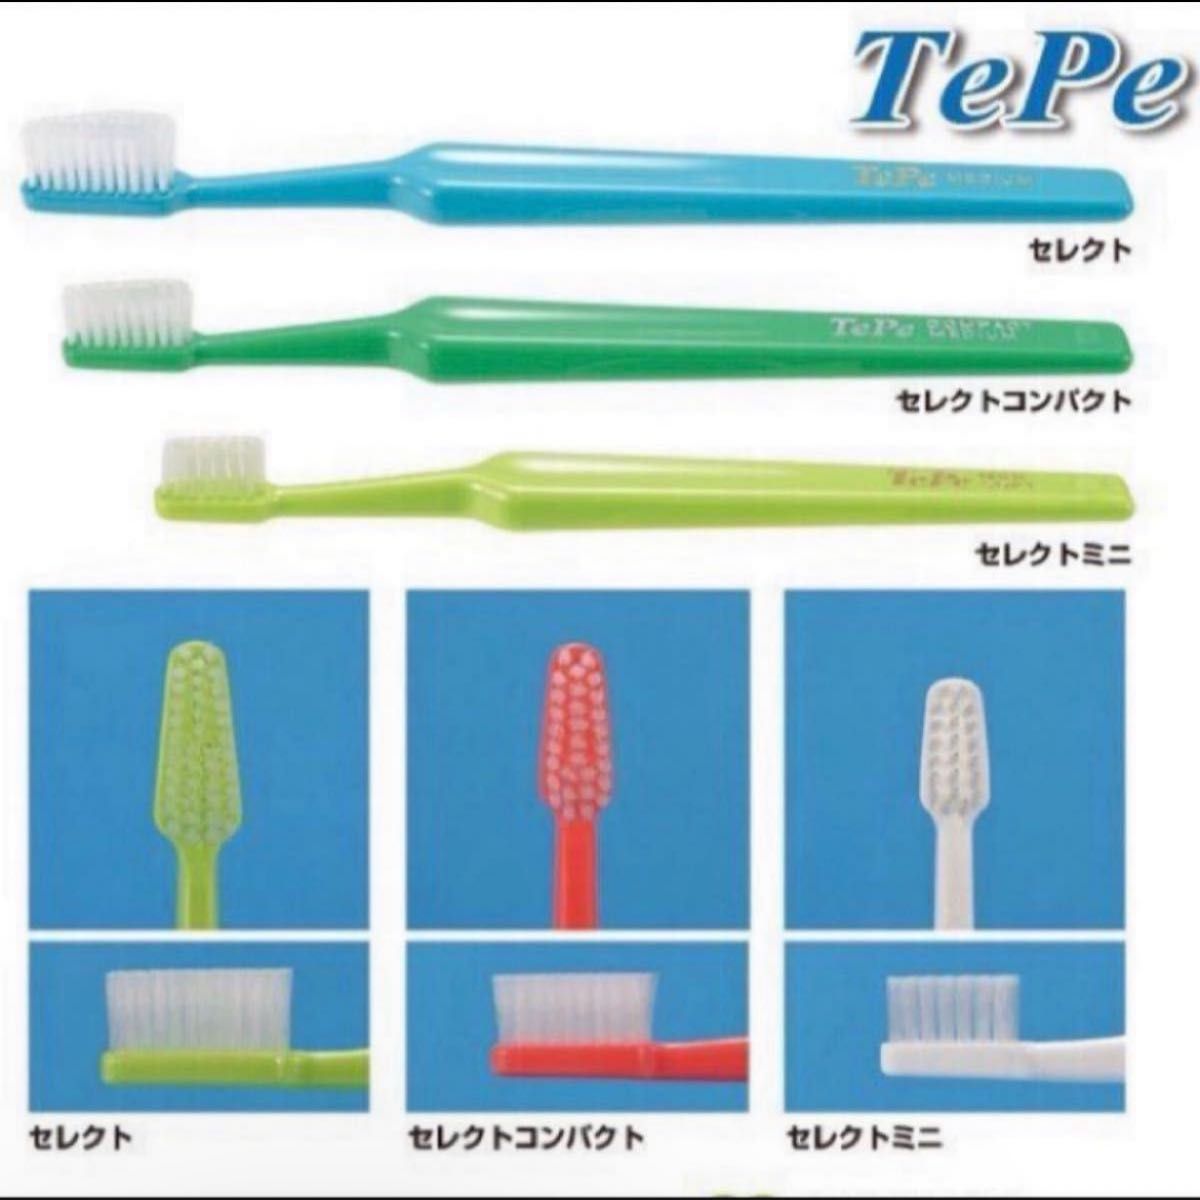 Tepe エルバ セレクトコンパクト ミディアム 歯ブラシ 15本セット